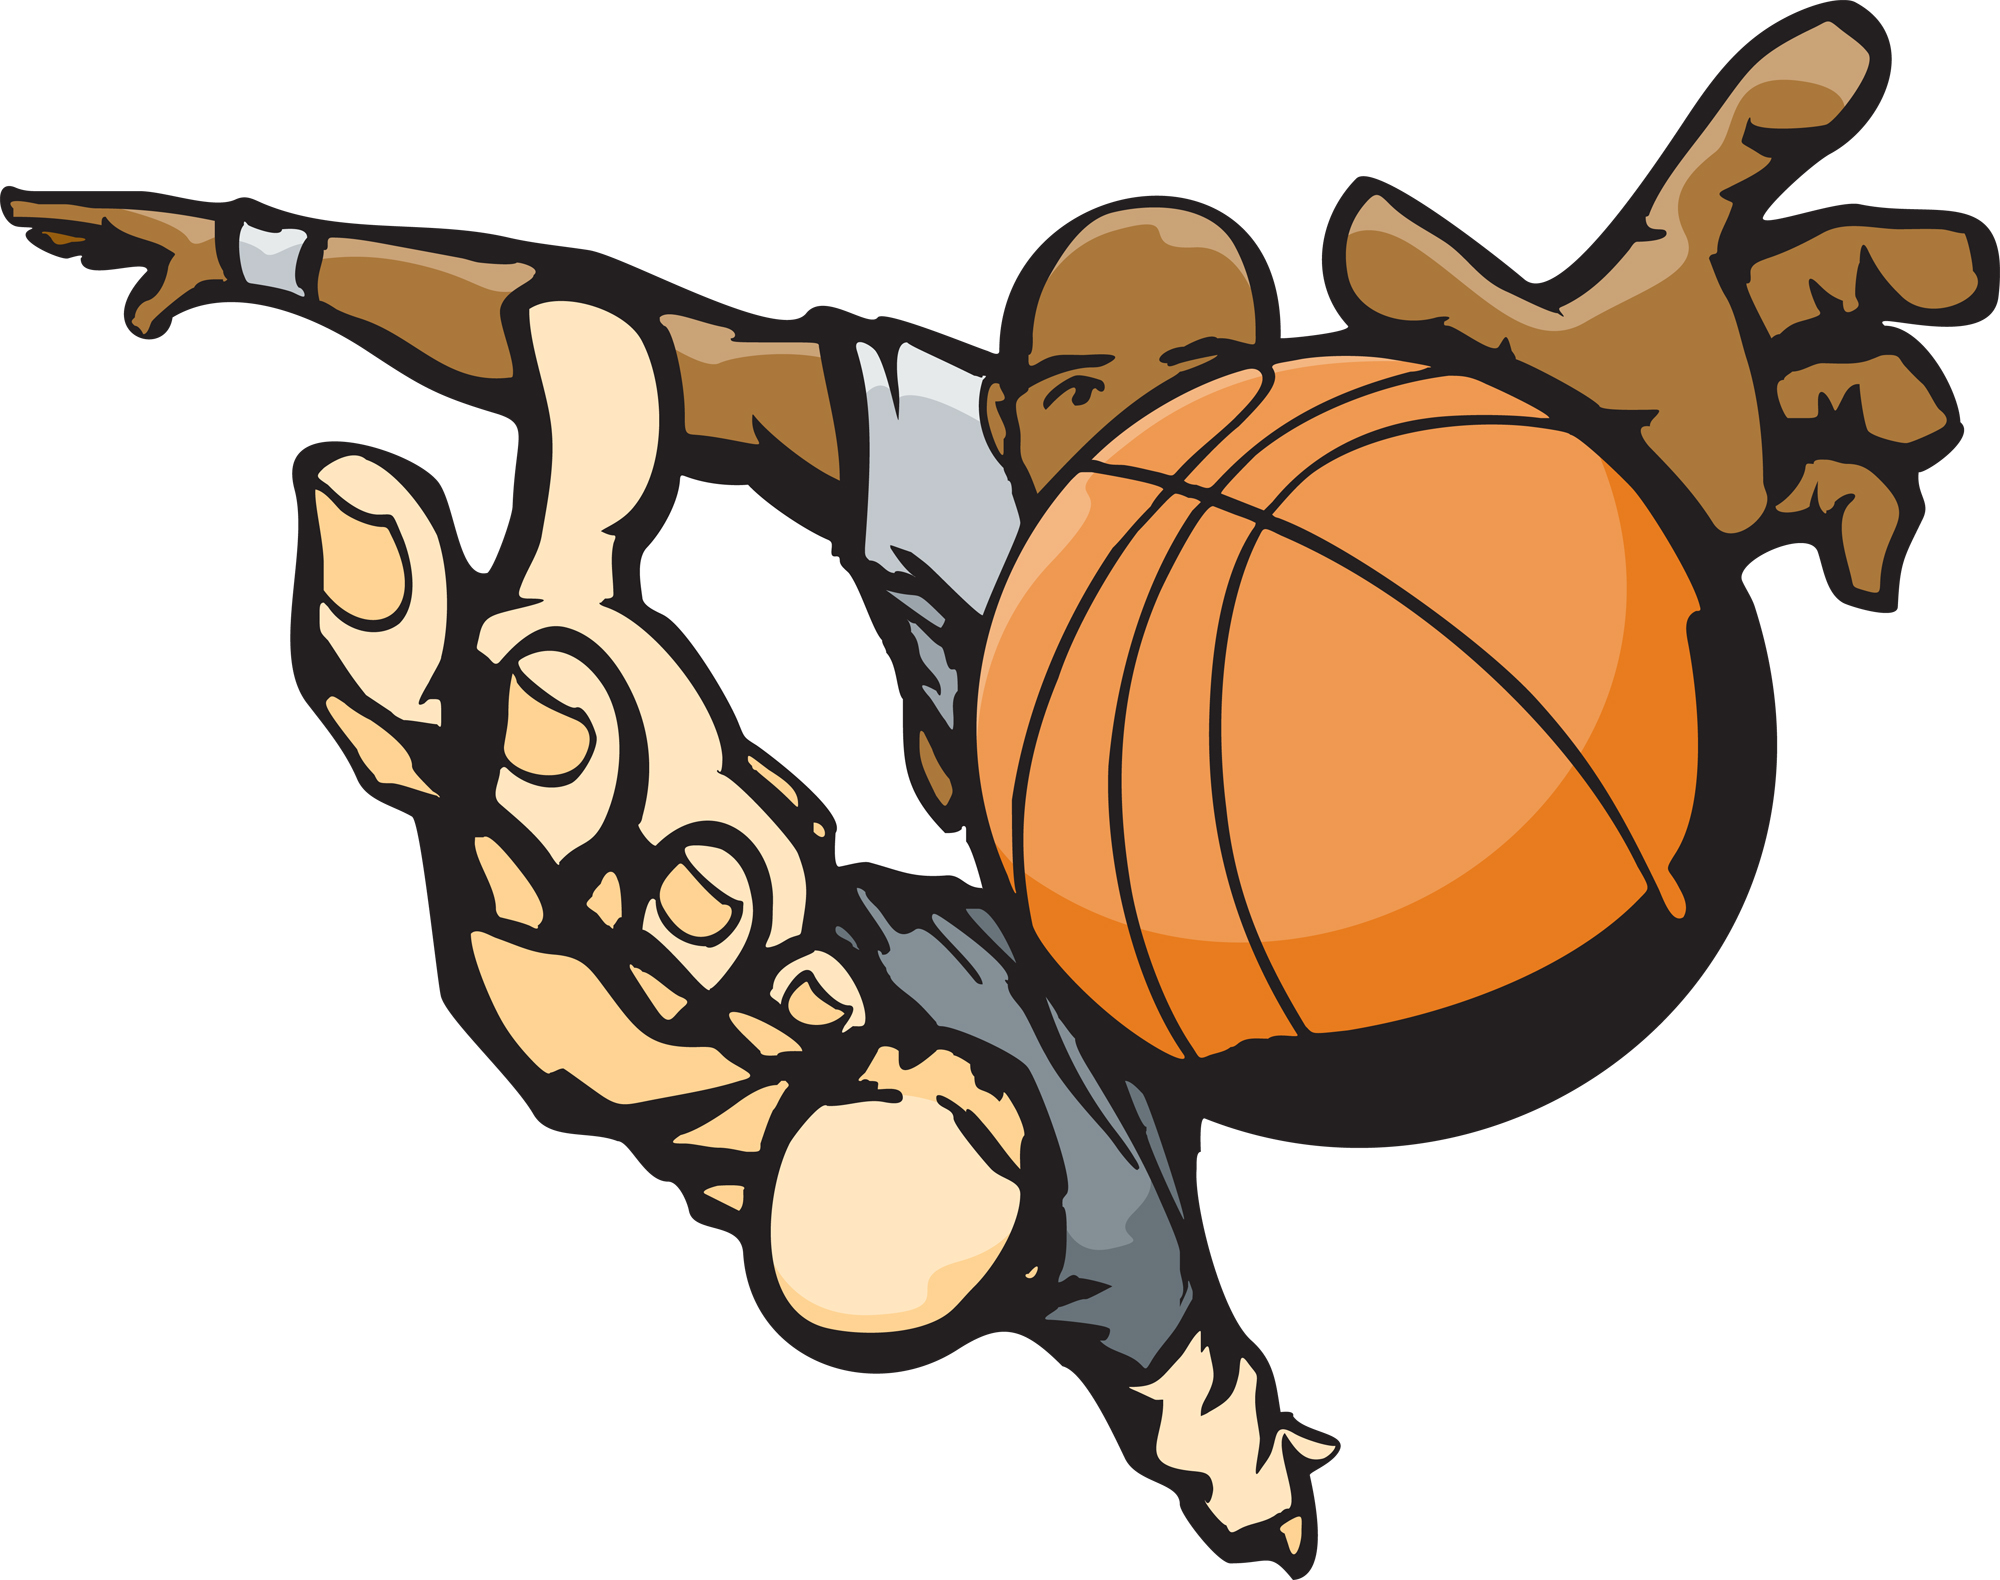 Basketball Images Clip Art Wallpaper | Free Download Wallpaper ...